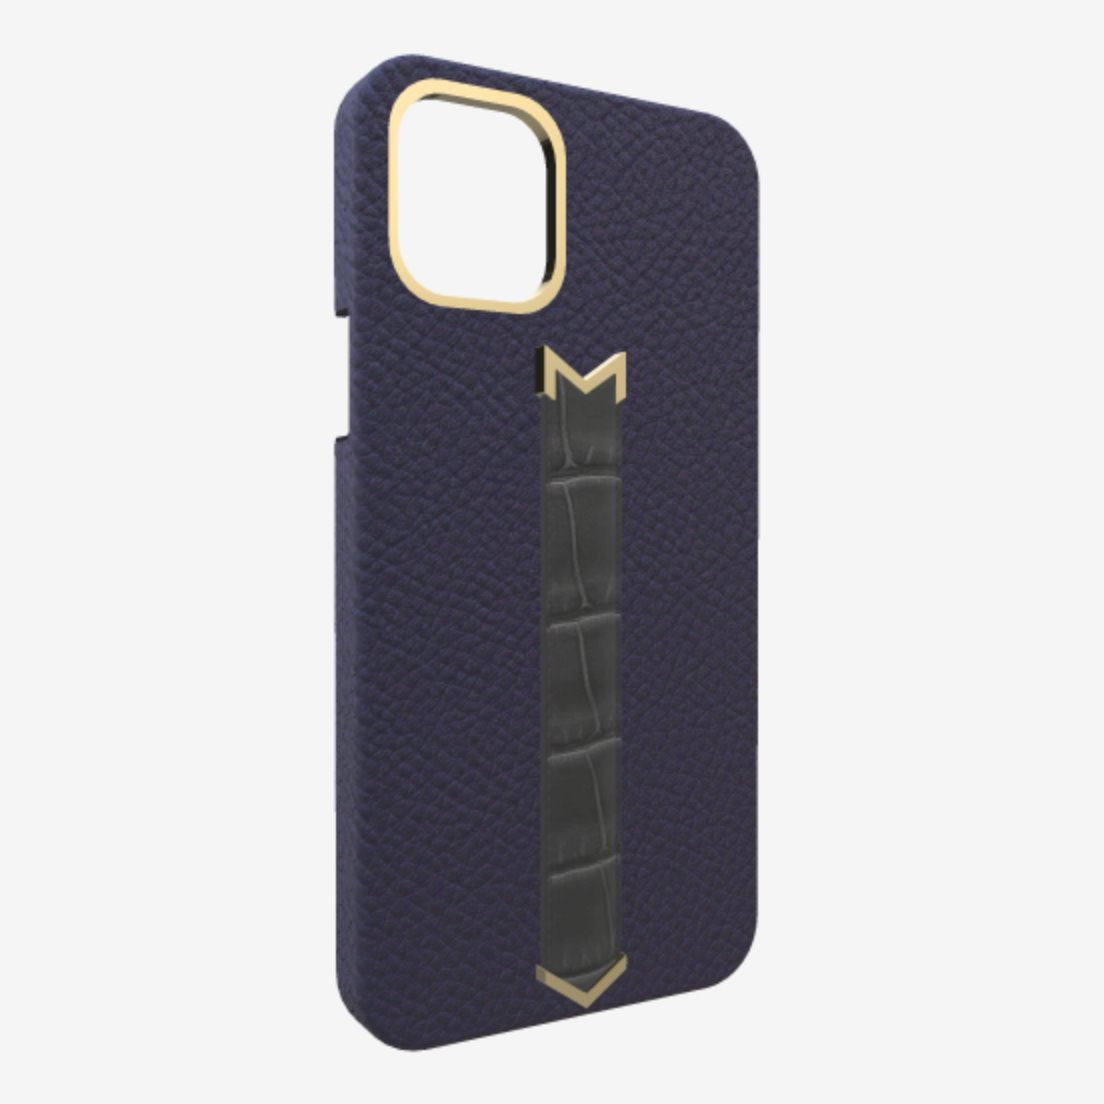 Gold Finger Strap Case for iPhone 13 in Genuine Calfskin and Alligator Navy Blue Elite Grey 